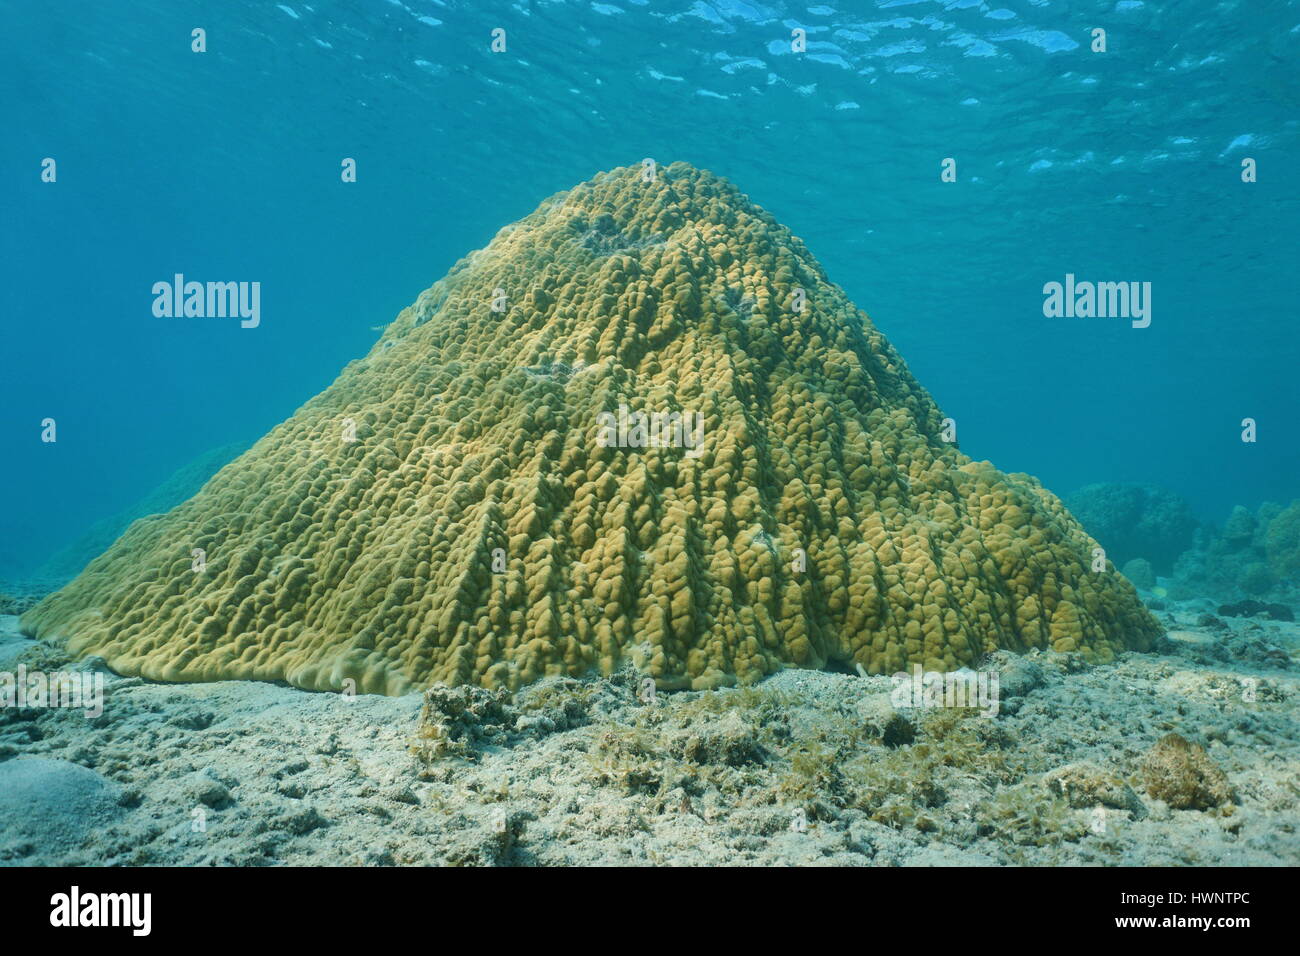 Lobe coral Porites lobata on the ocean floor, lagoon of Tahiti, Pacific ocean, French Polynesia Stock Photo